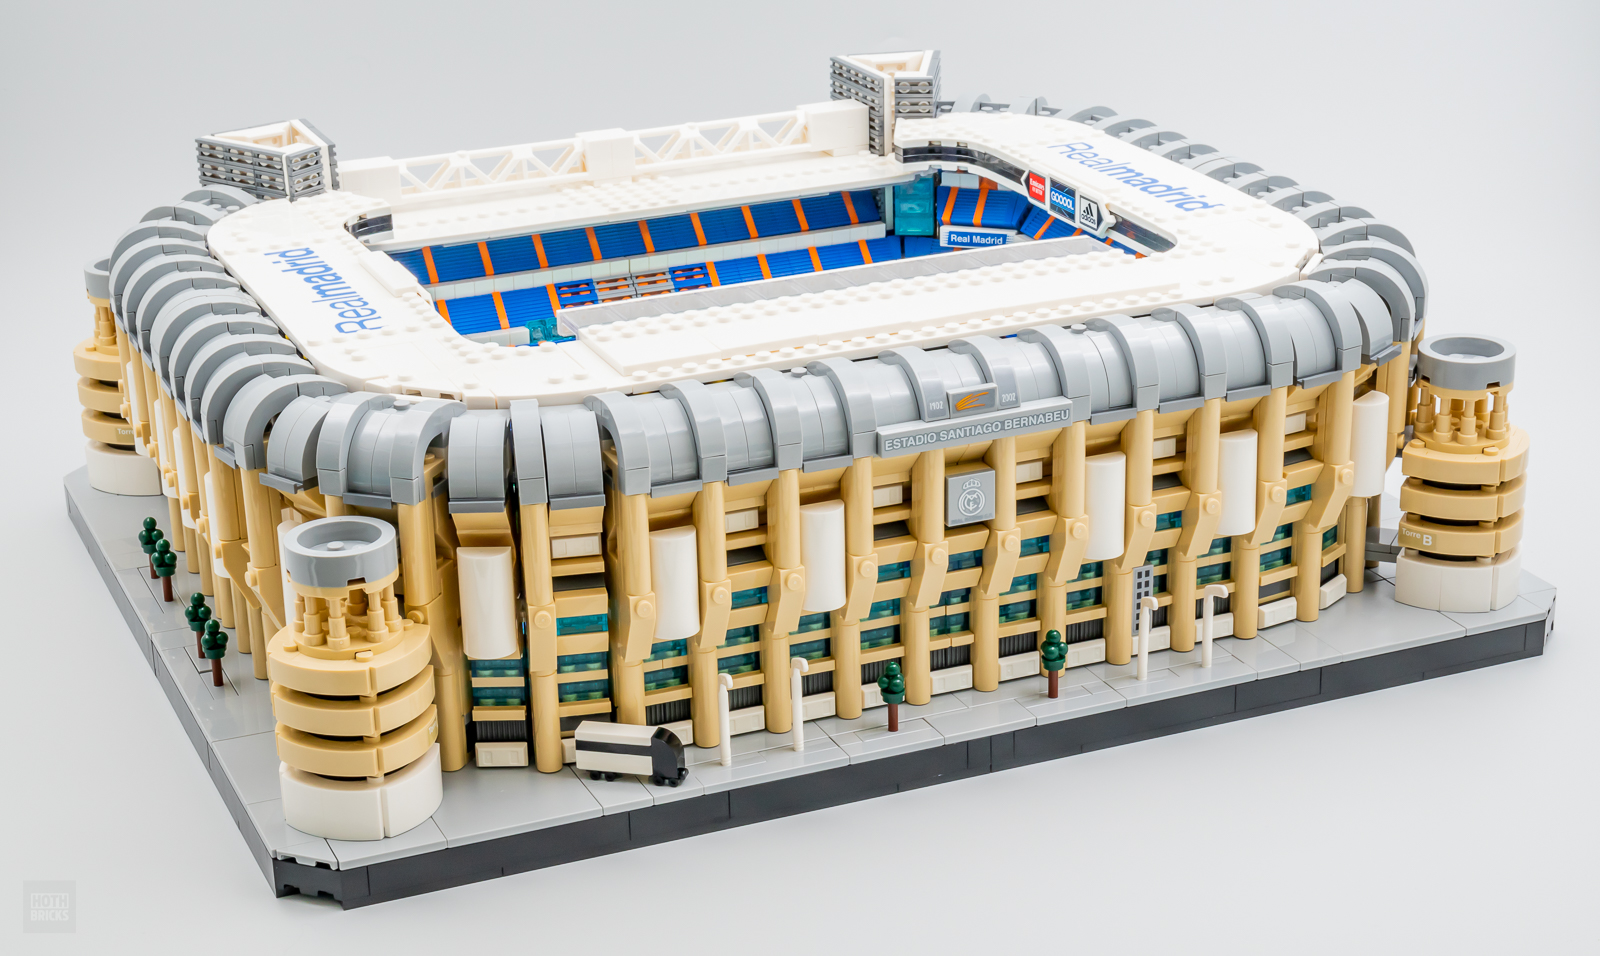 Latest LEGO stadium is 10299 Real Madrid – Santiago Bernabéu Stadium –  Blocks – the monthly LEGO magazine for fans